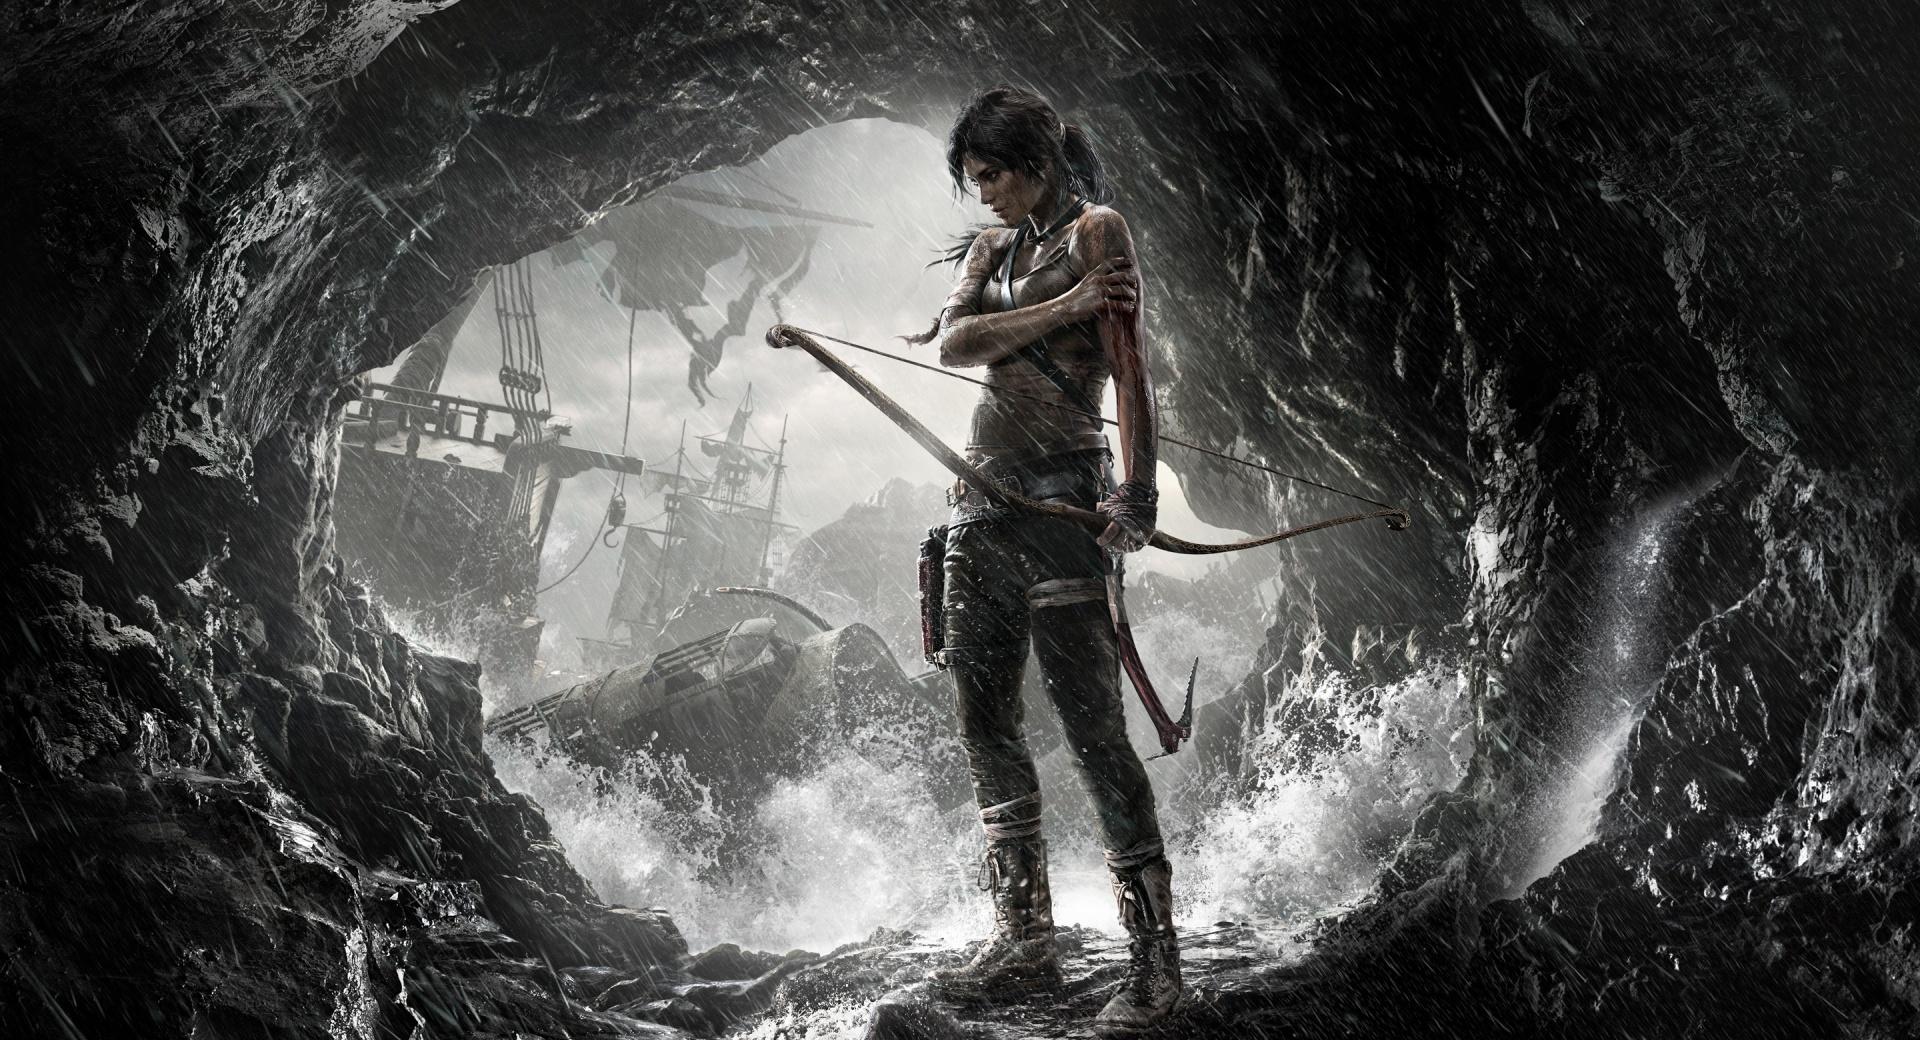 Tomb Raider Lara Croft 2013 at 1600 x 1200 size wallpapers HD quality